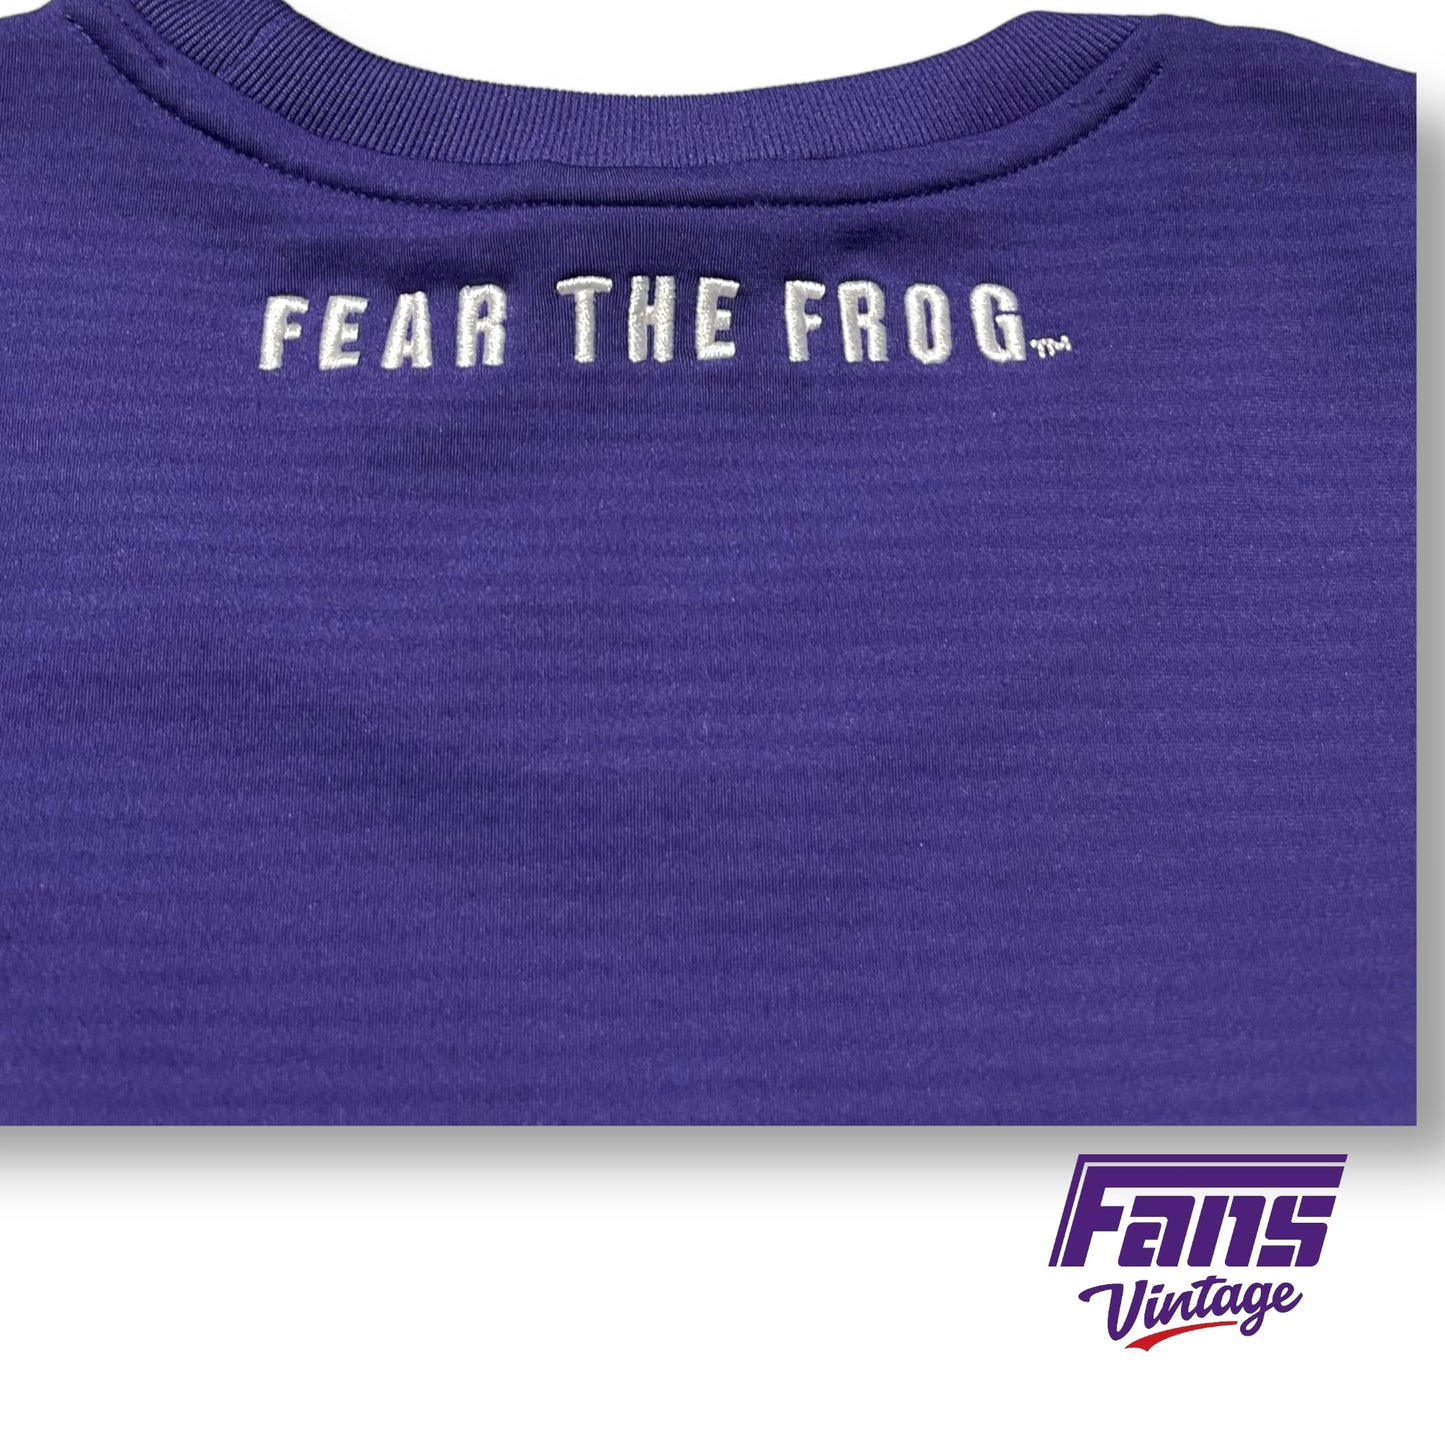 Premium TCU Team Issued “Fear the Frog” Nike On Field Sideline Crewneck